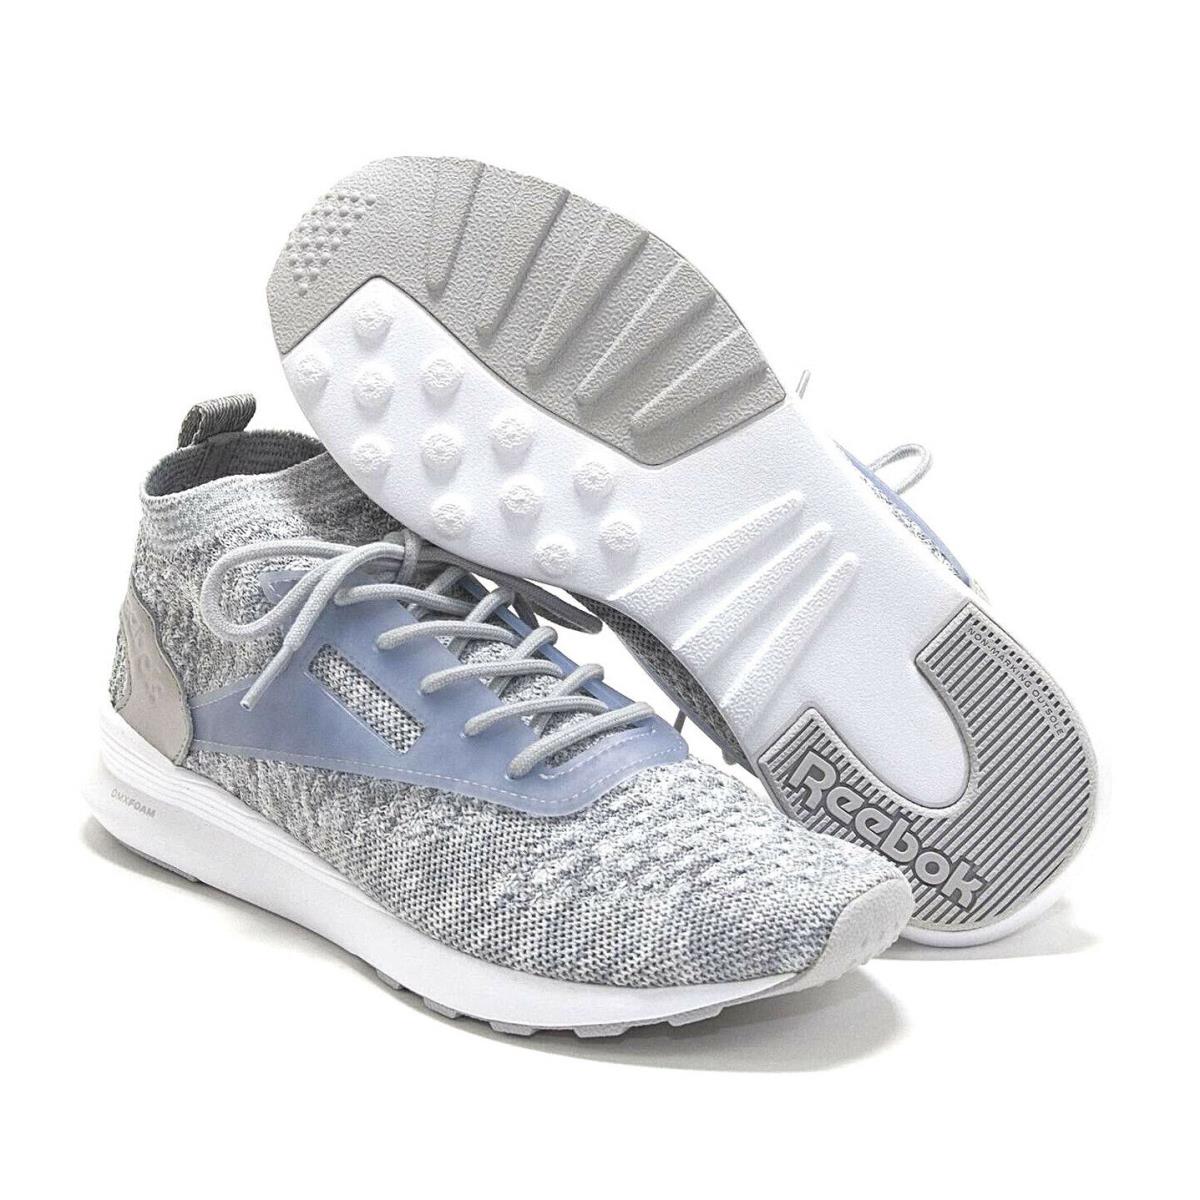 Men Reebok Zoku Runner Ultraknit Heather Grey Running Shoes Sneakers BD5488 - Gray